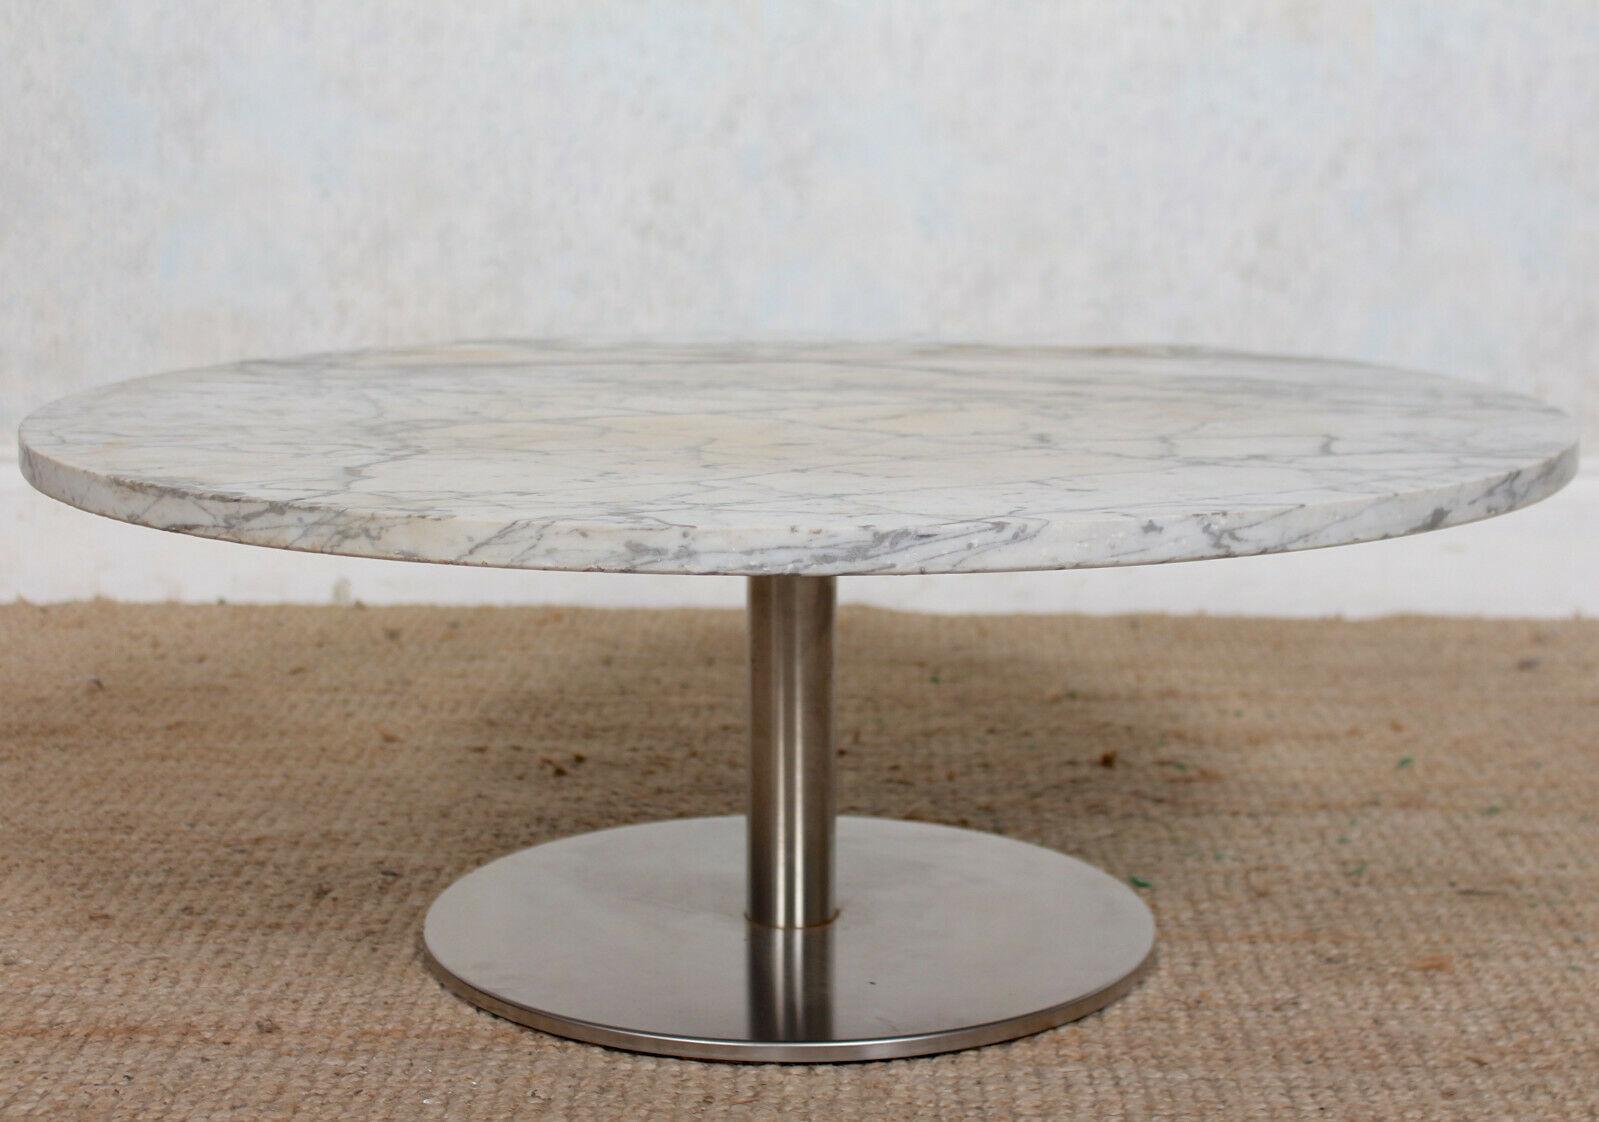 An impressive mid-20th century marble coffee table.

The circular marble top raised on a chromed column and base.

European, circa 1970.